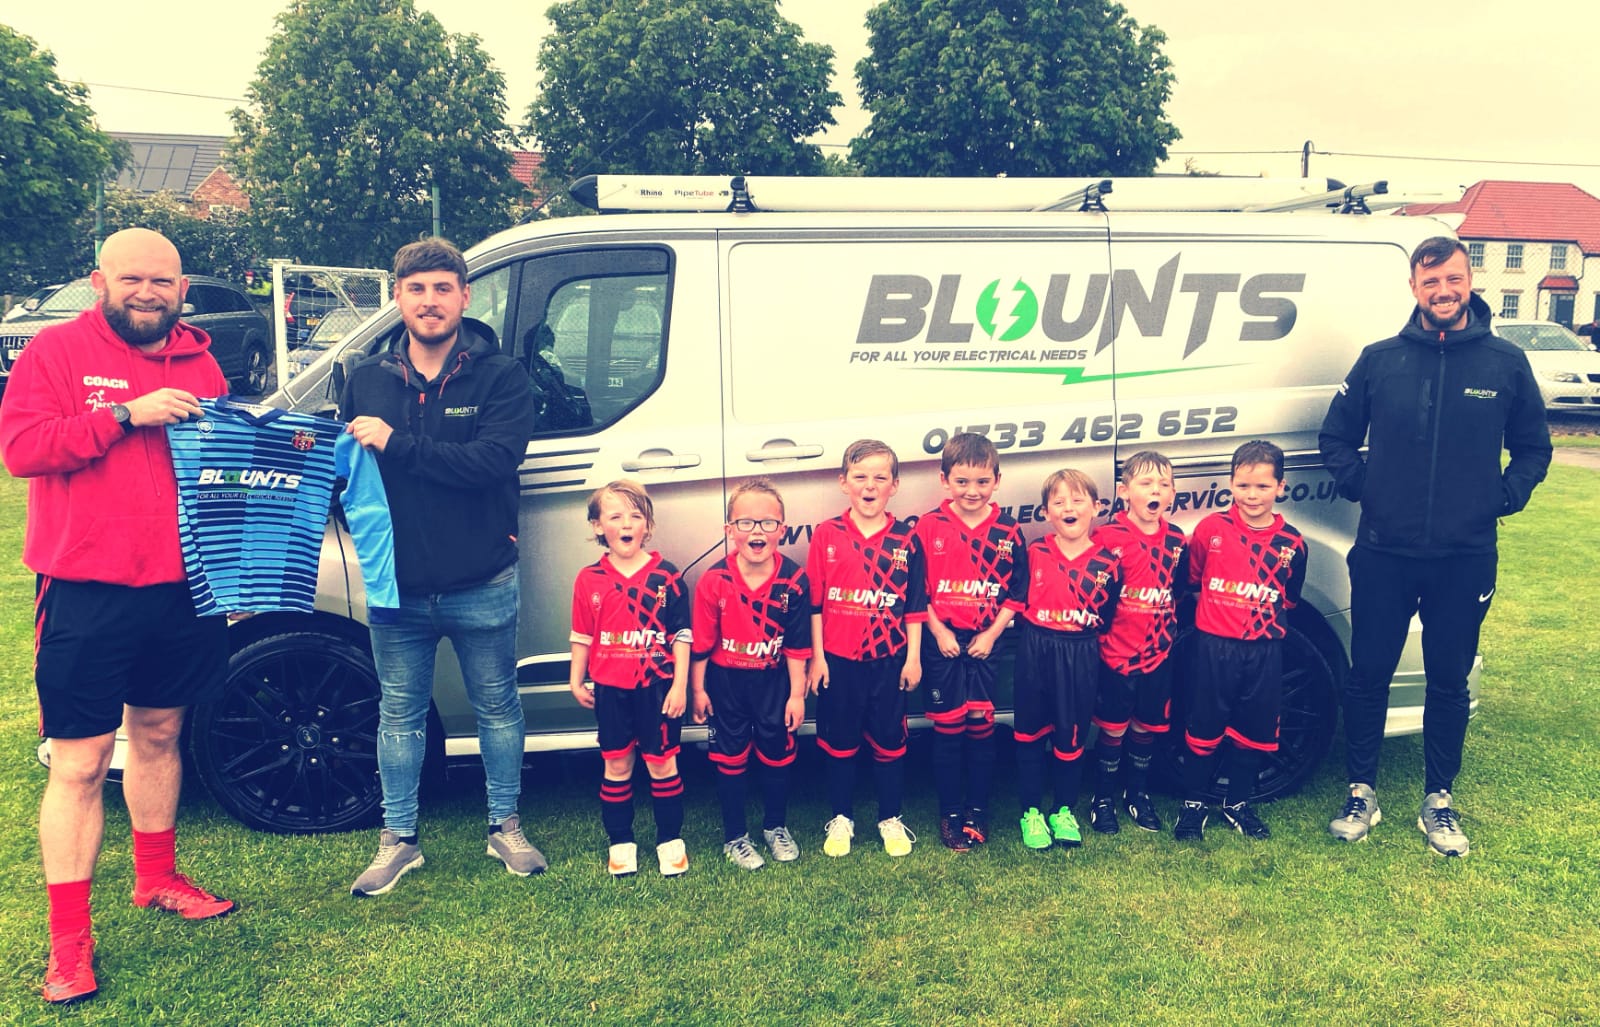 Blounts Electrical sponsor kids football team